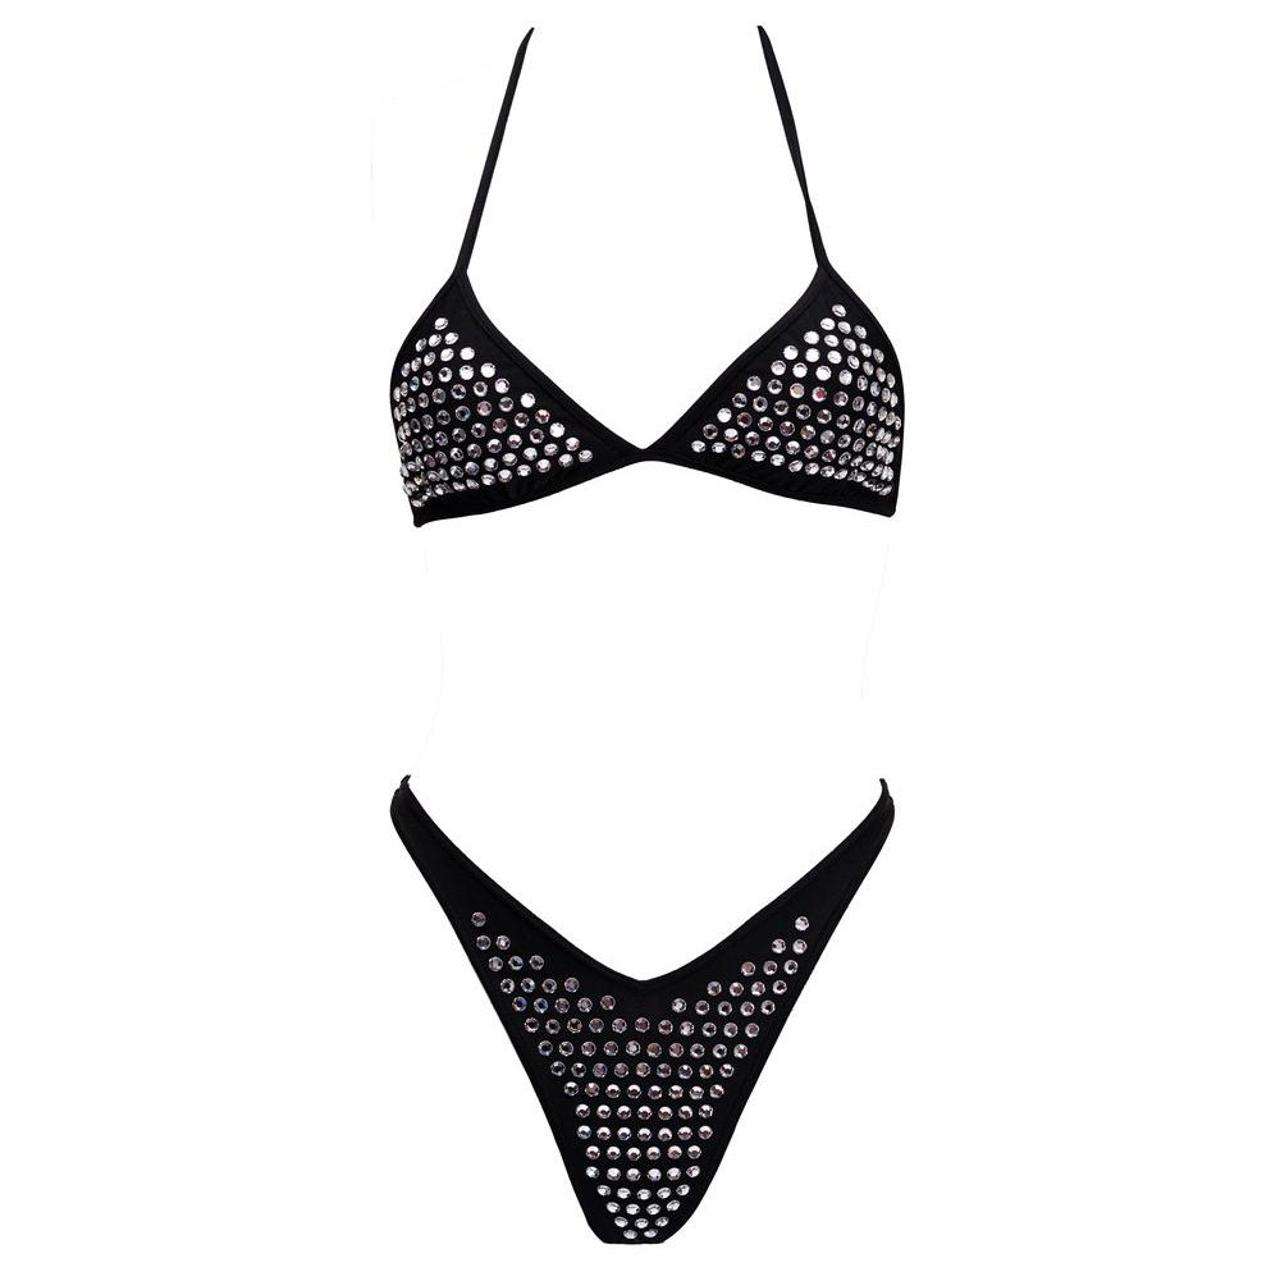 Black/White Chanel bikini top — CRAZED WEAR